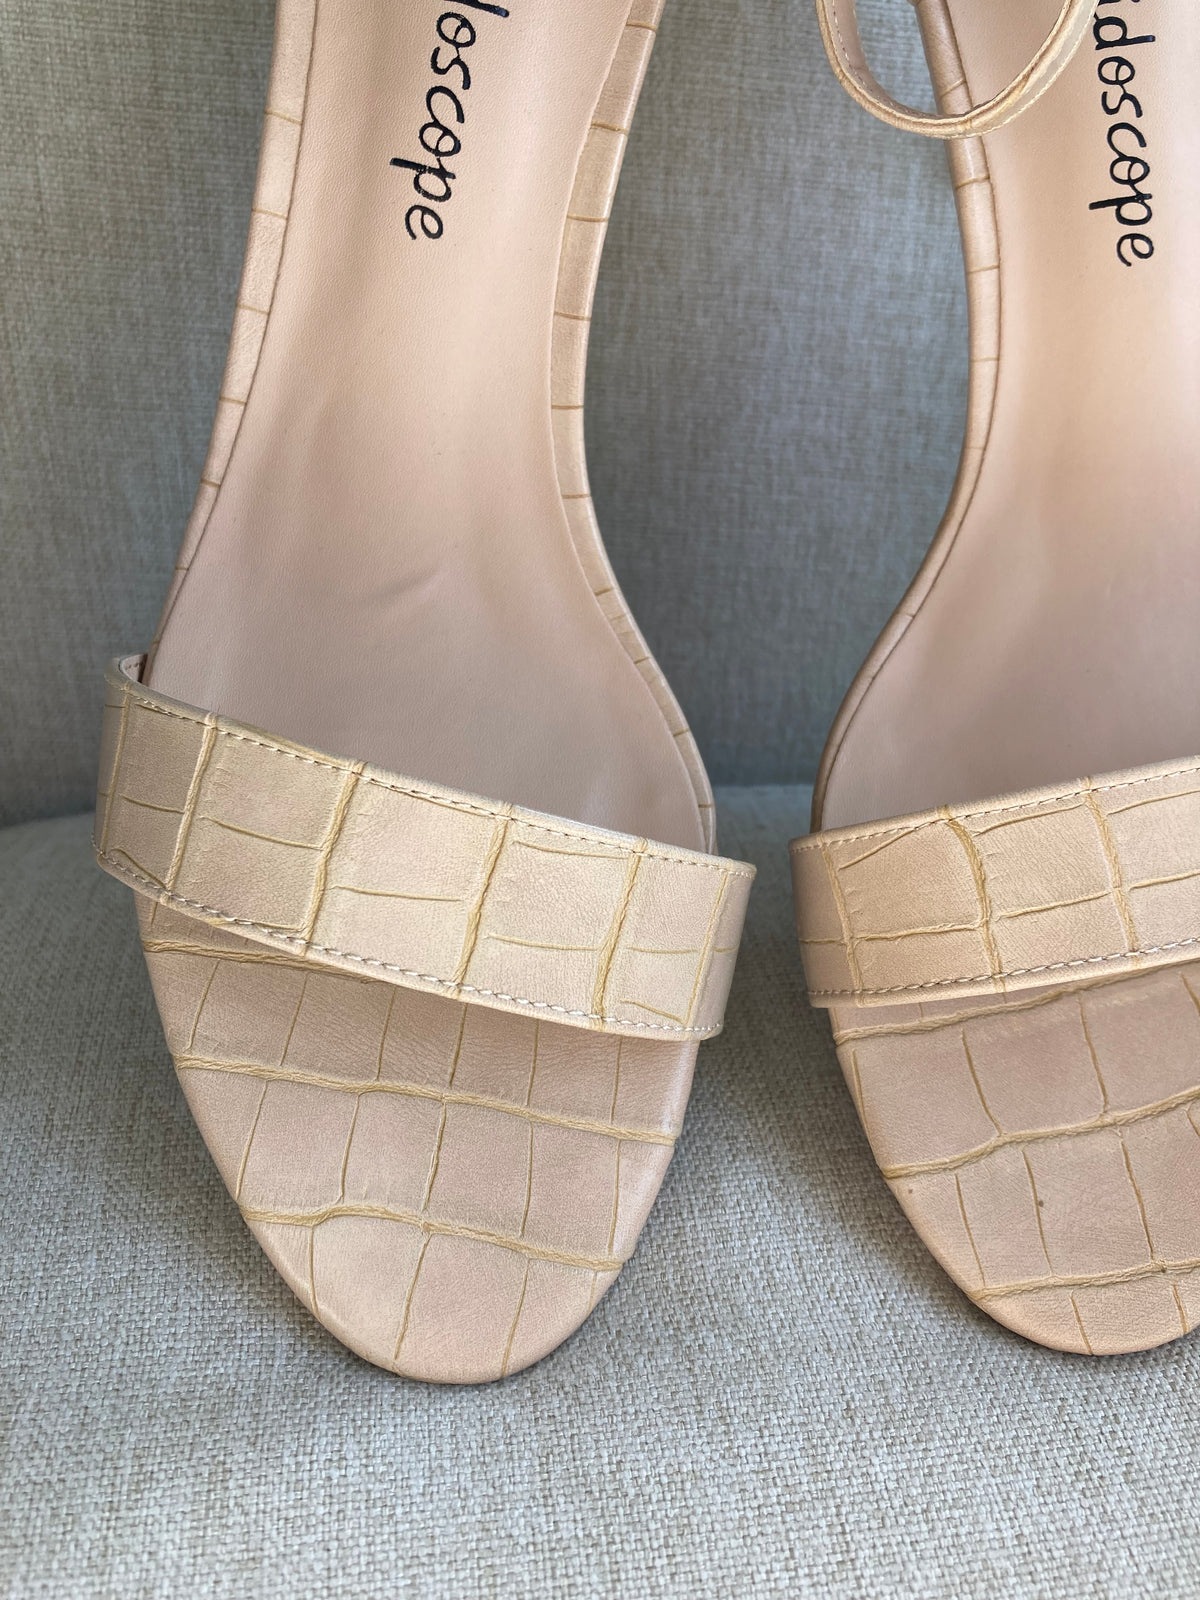 Nude croc heels by KALEIDOSCOPE- Size 7